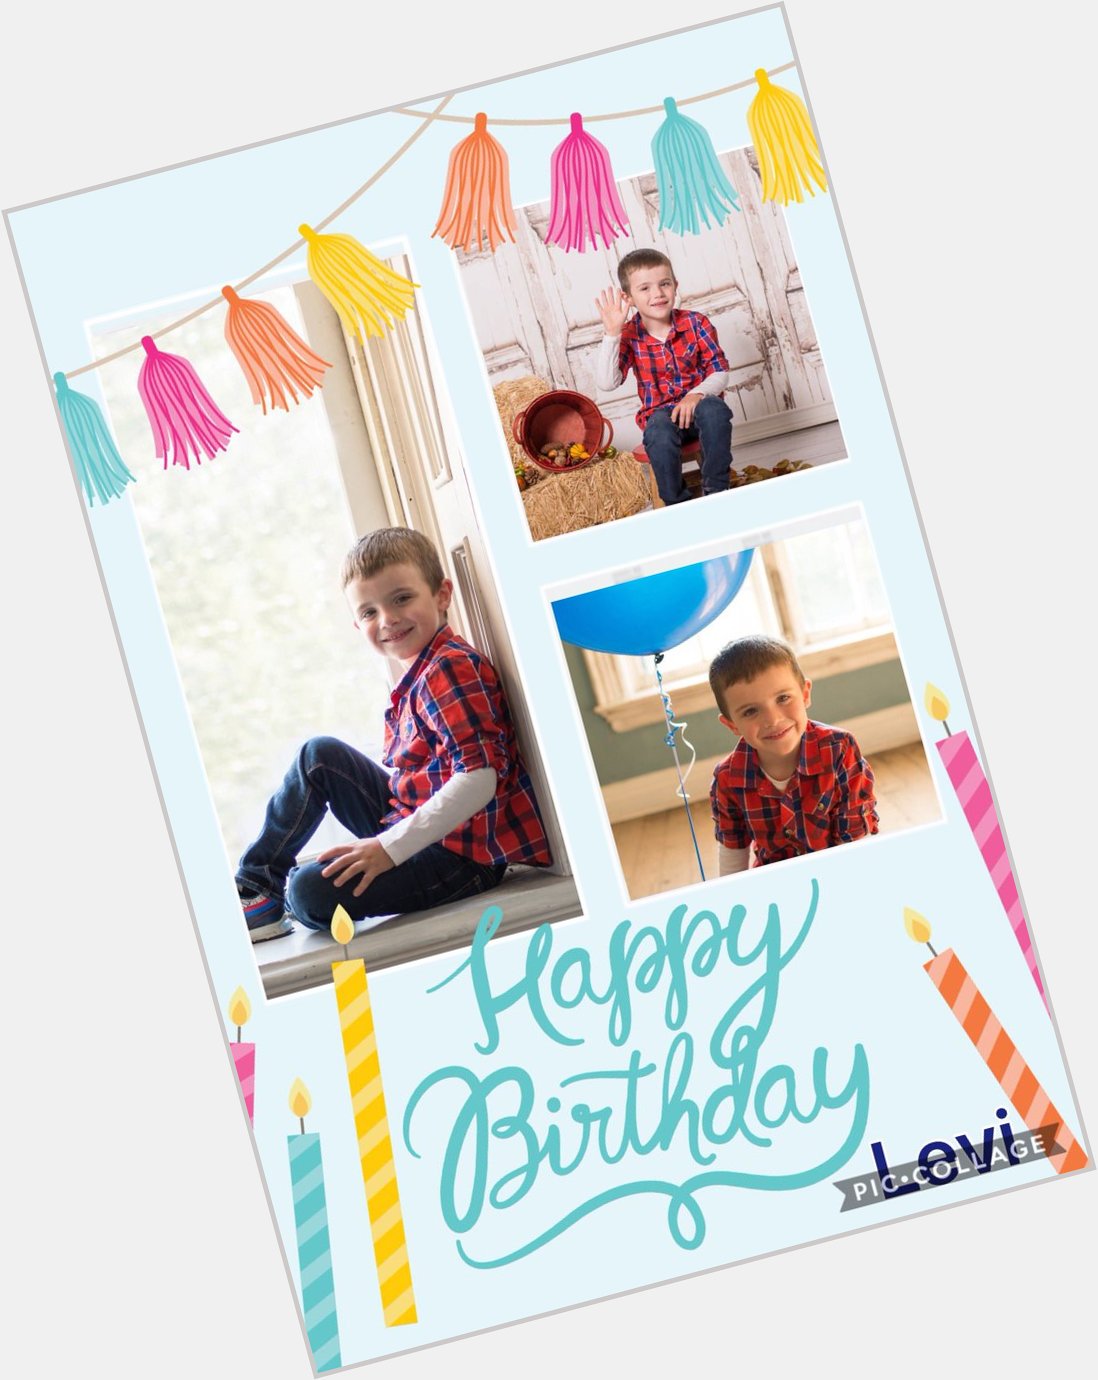   Happy birthday Gwen Stefani and Levi Pancyrz 